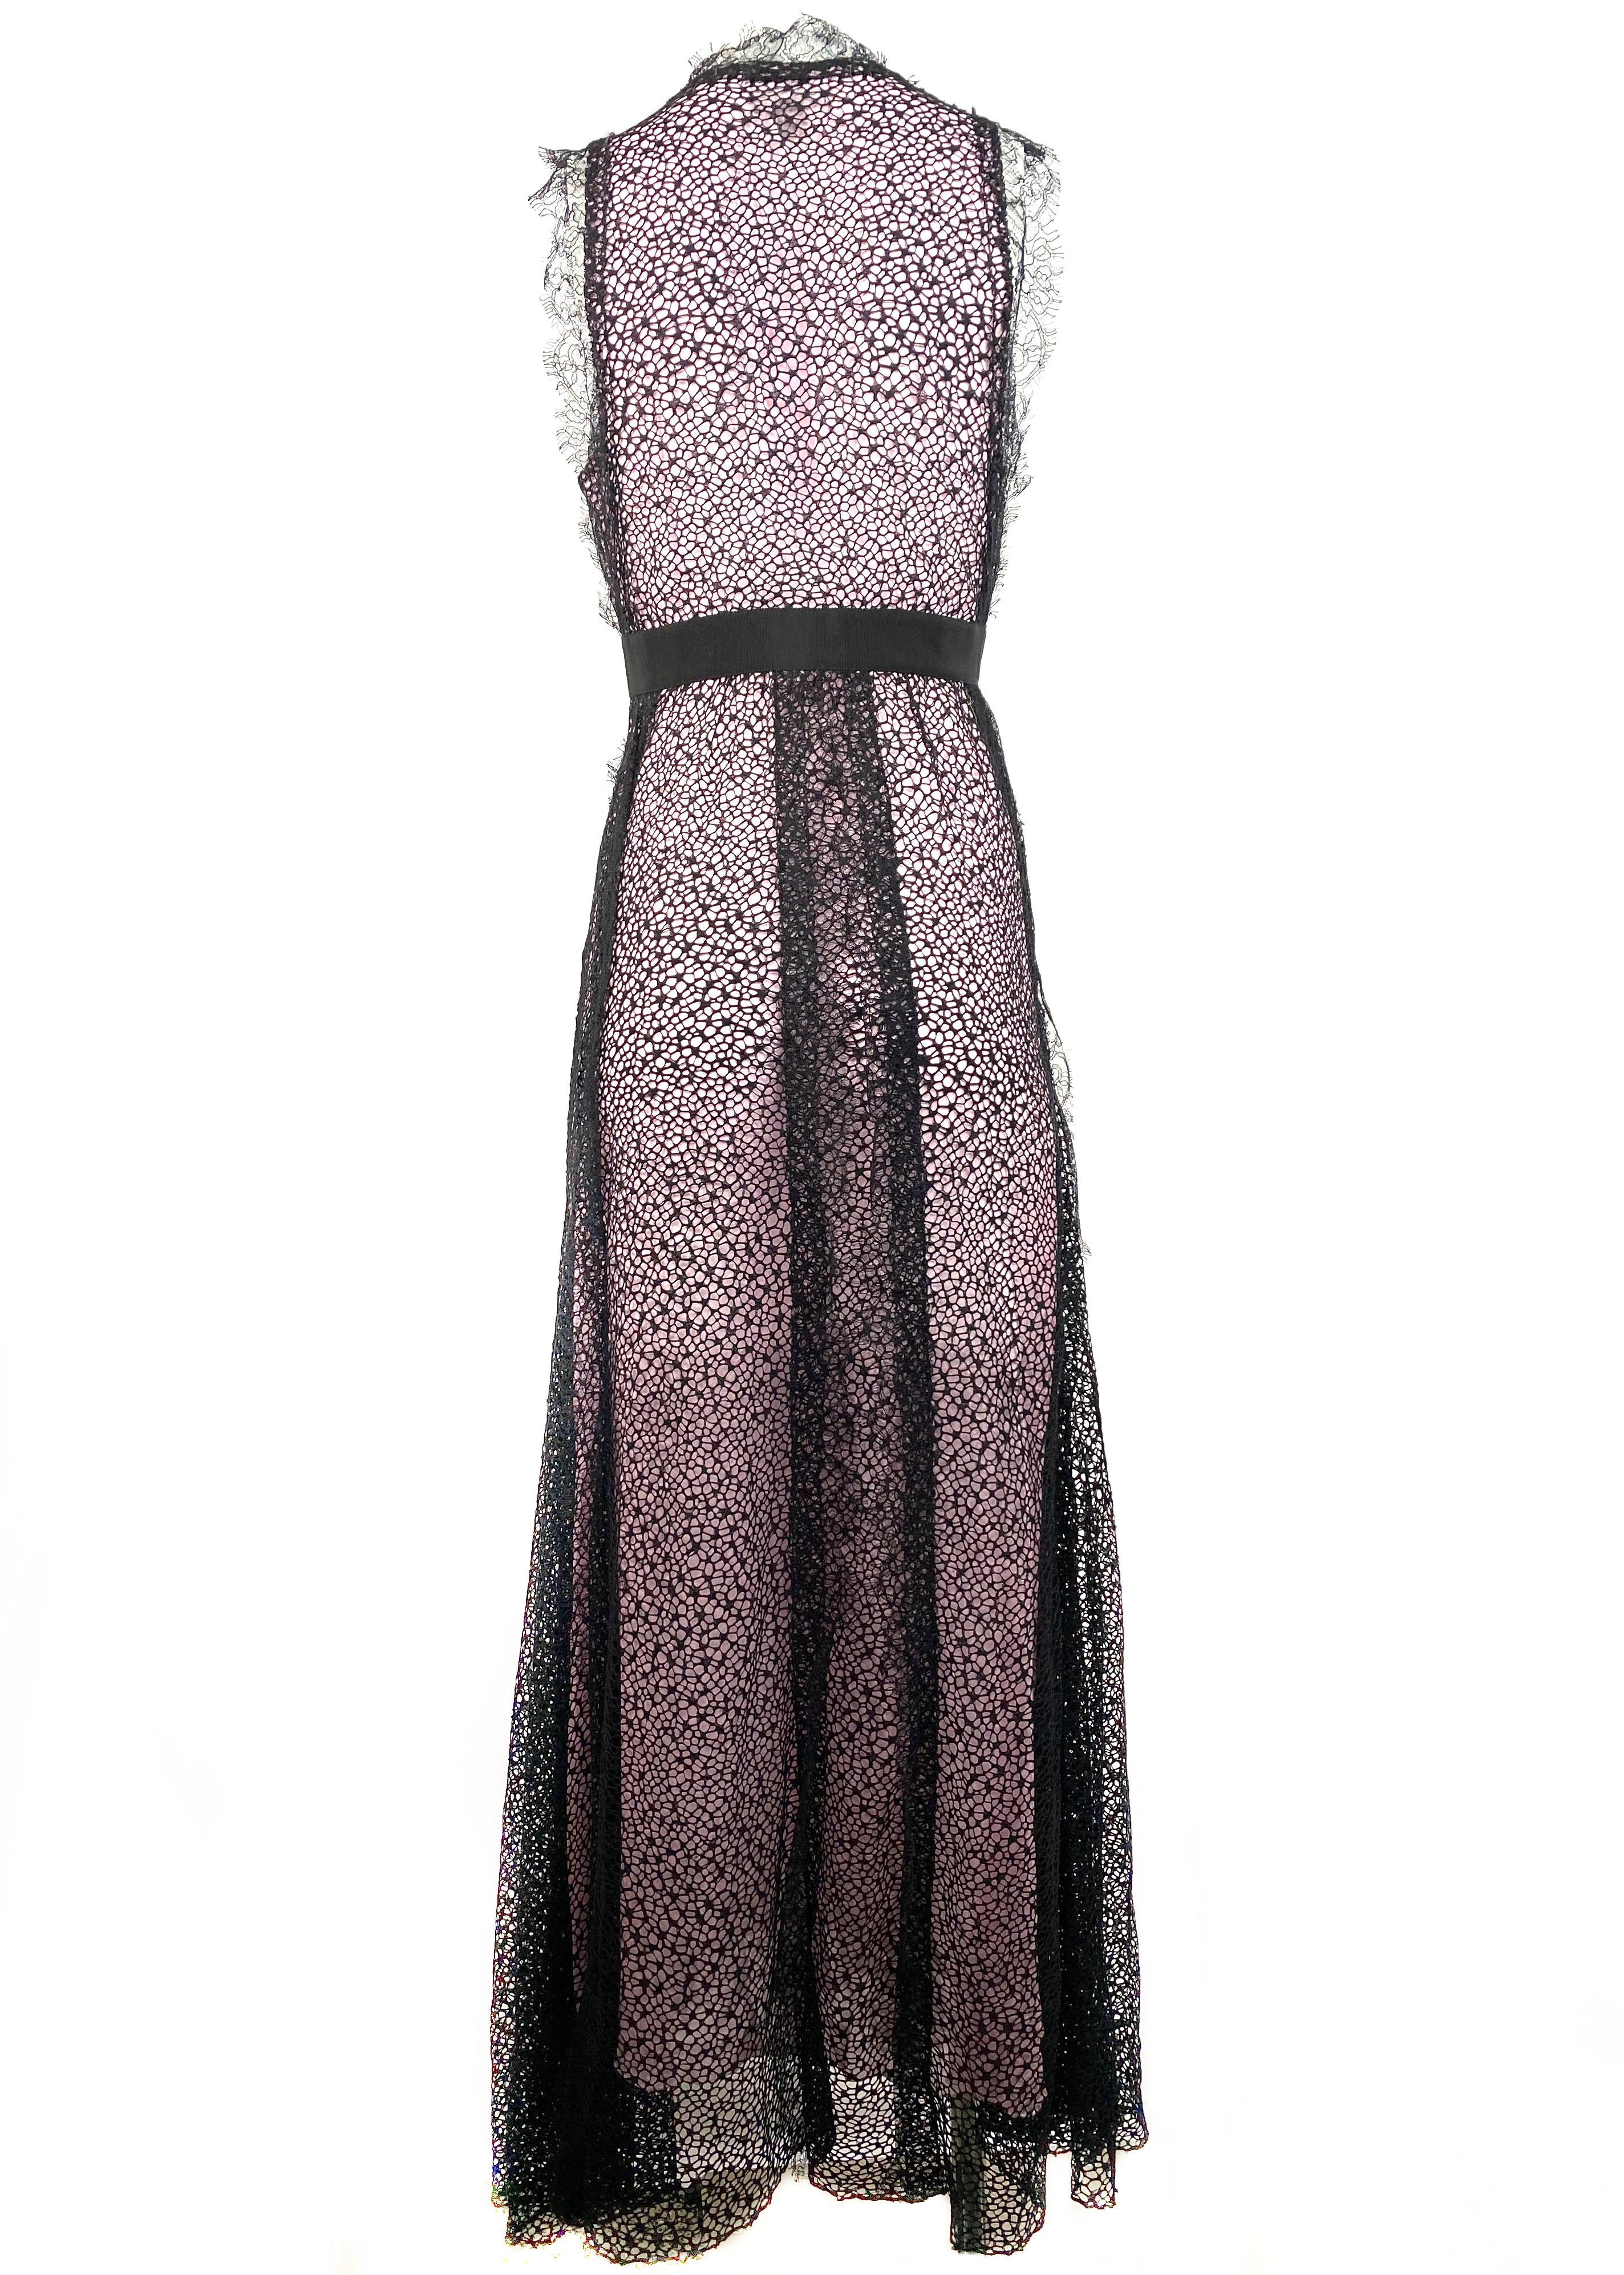 Giambattista Valli Paris Pink and Black Sleeveless Maxi Dress Size 40 1